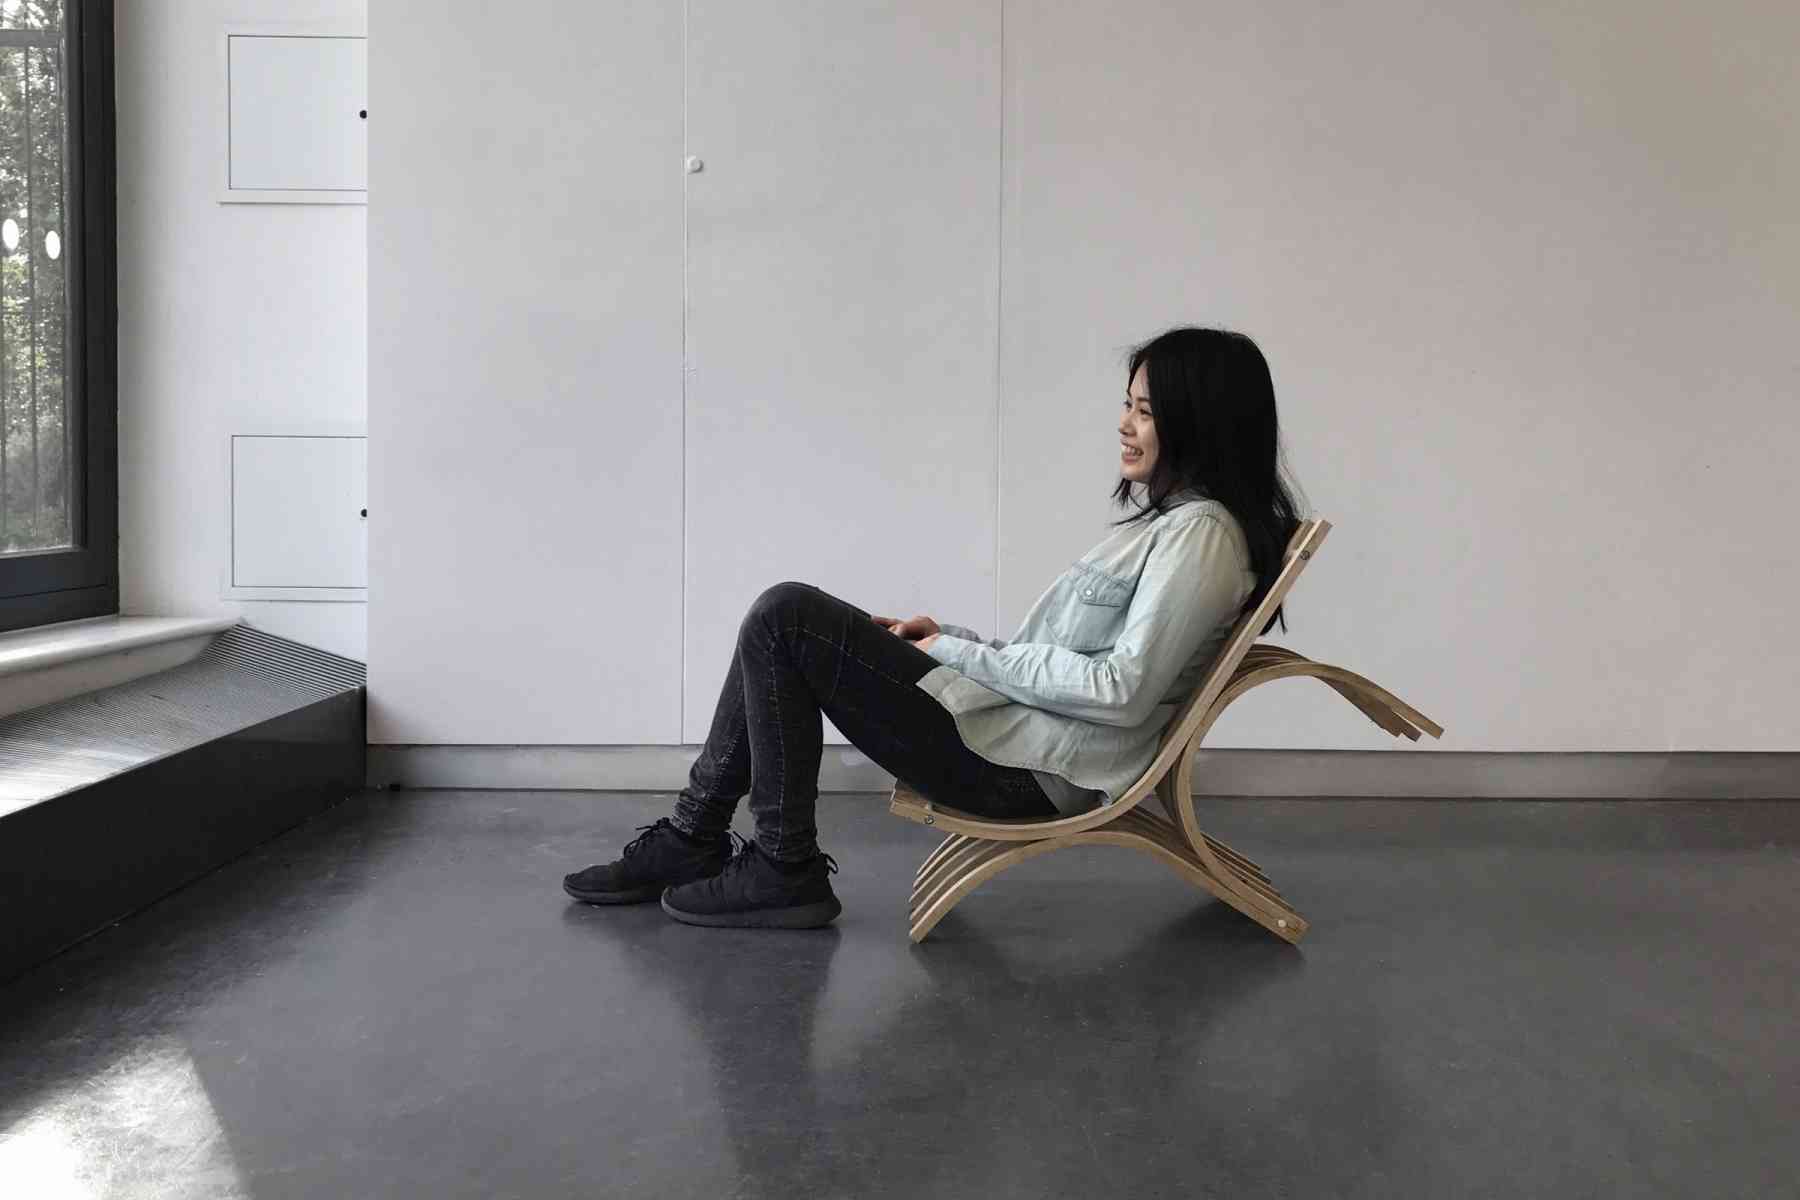 Product & Furniture Design MA - Student work